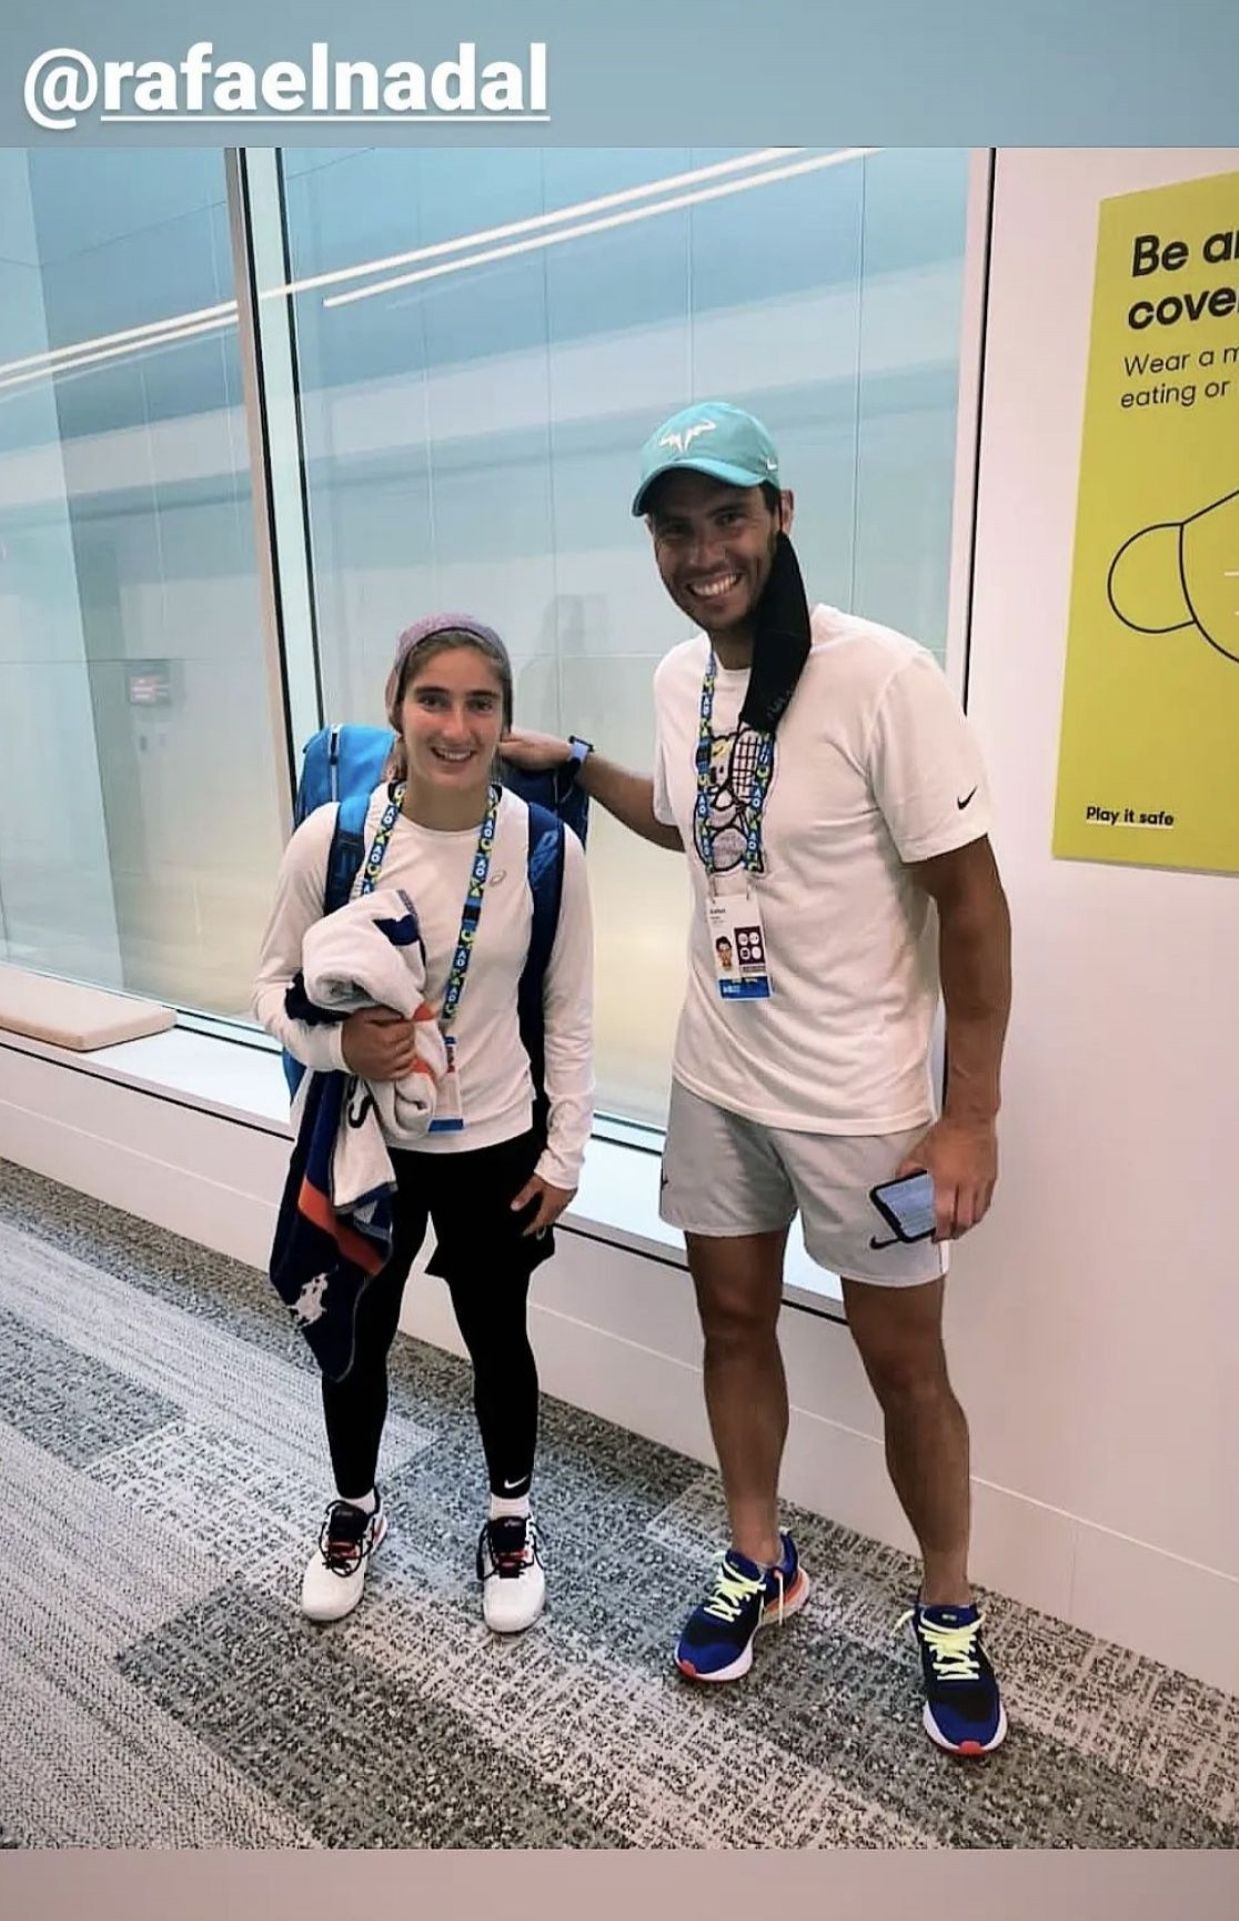 La joueuse iranienne Meshkatolzahra Safi a rencontré son idole, Rafael Nadal